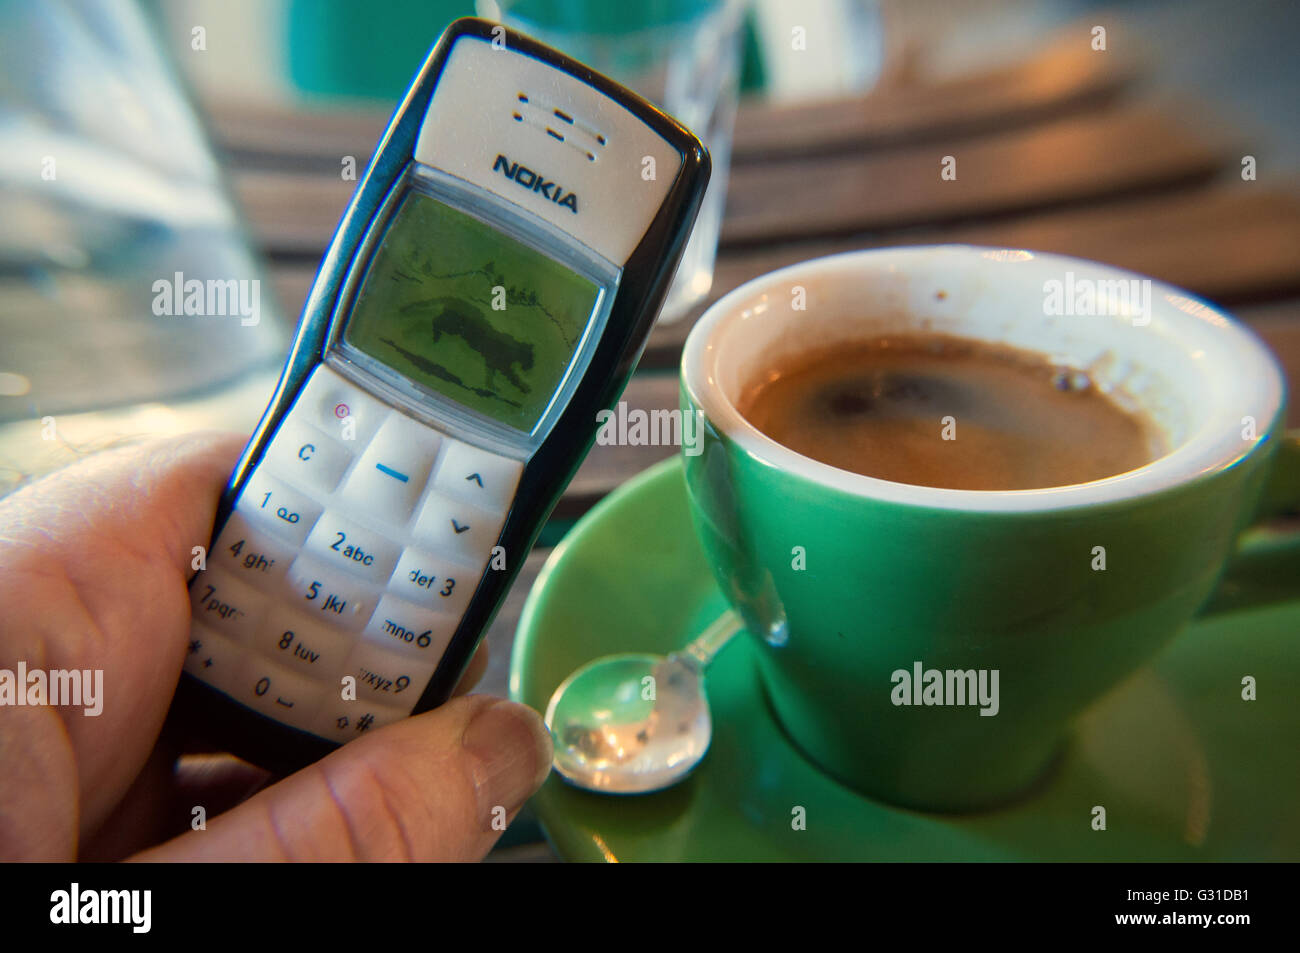 Coffee cup and retro Nokia phone, coffee shop, Melbourne, Victoria, Australia Stock Photo